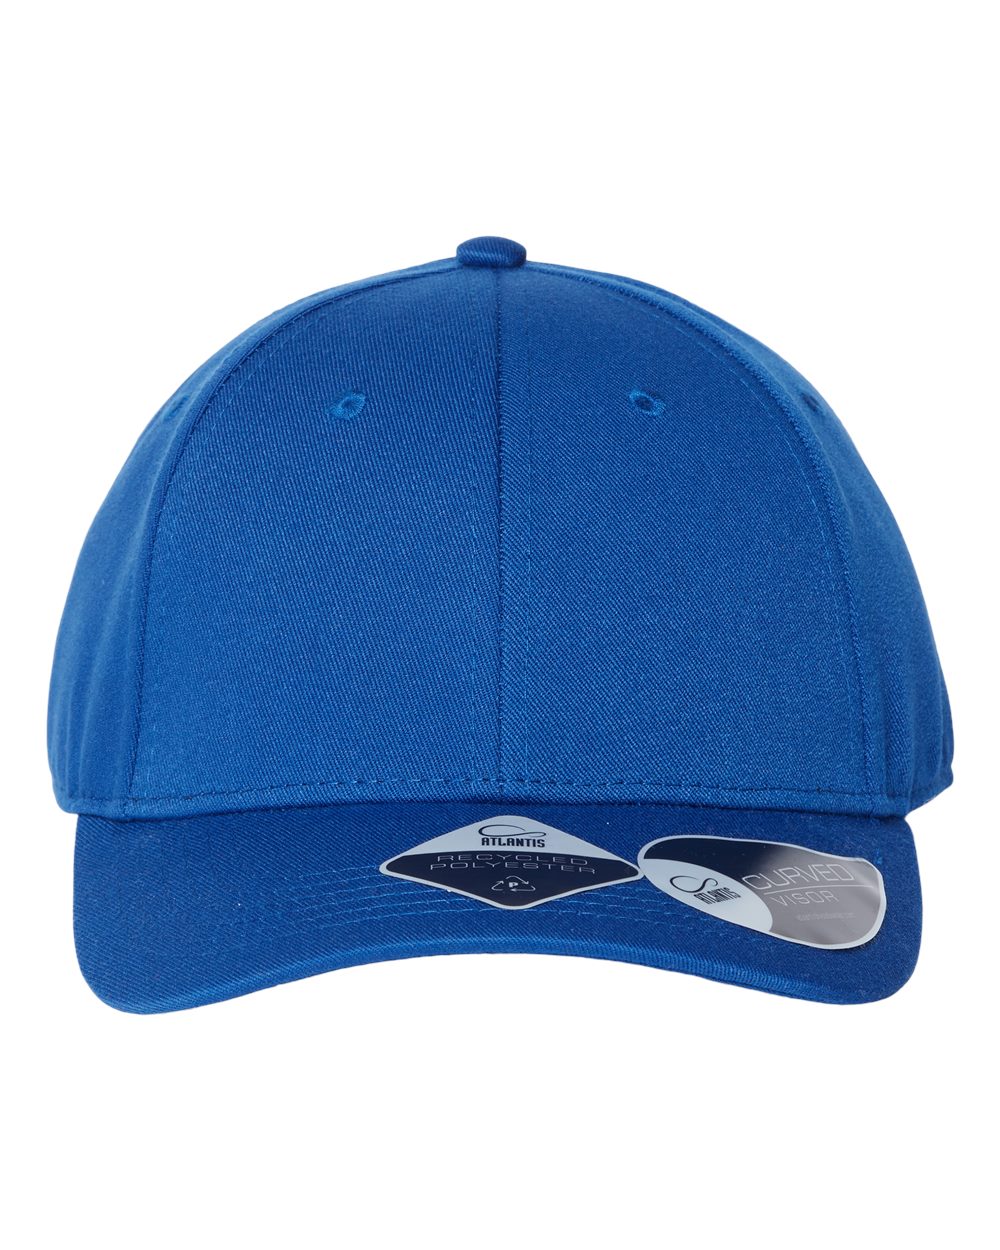 Customizable Atlantis Headwear Structured Joshua Hat in blue.